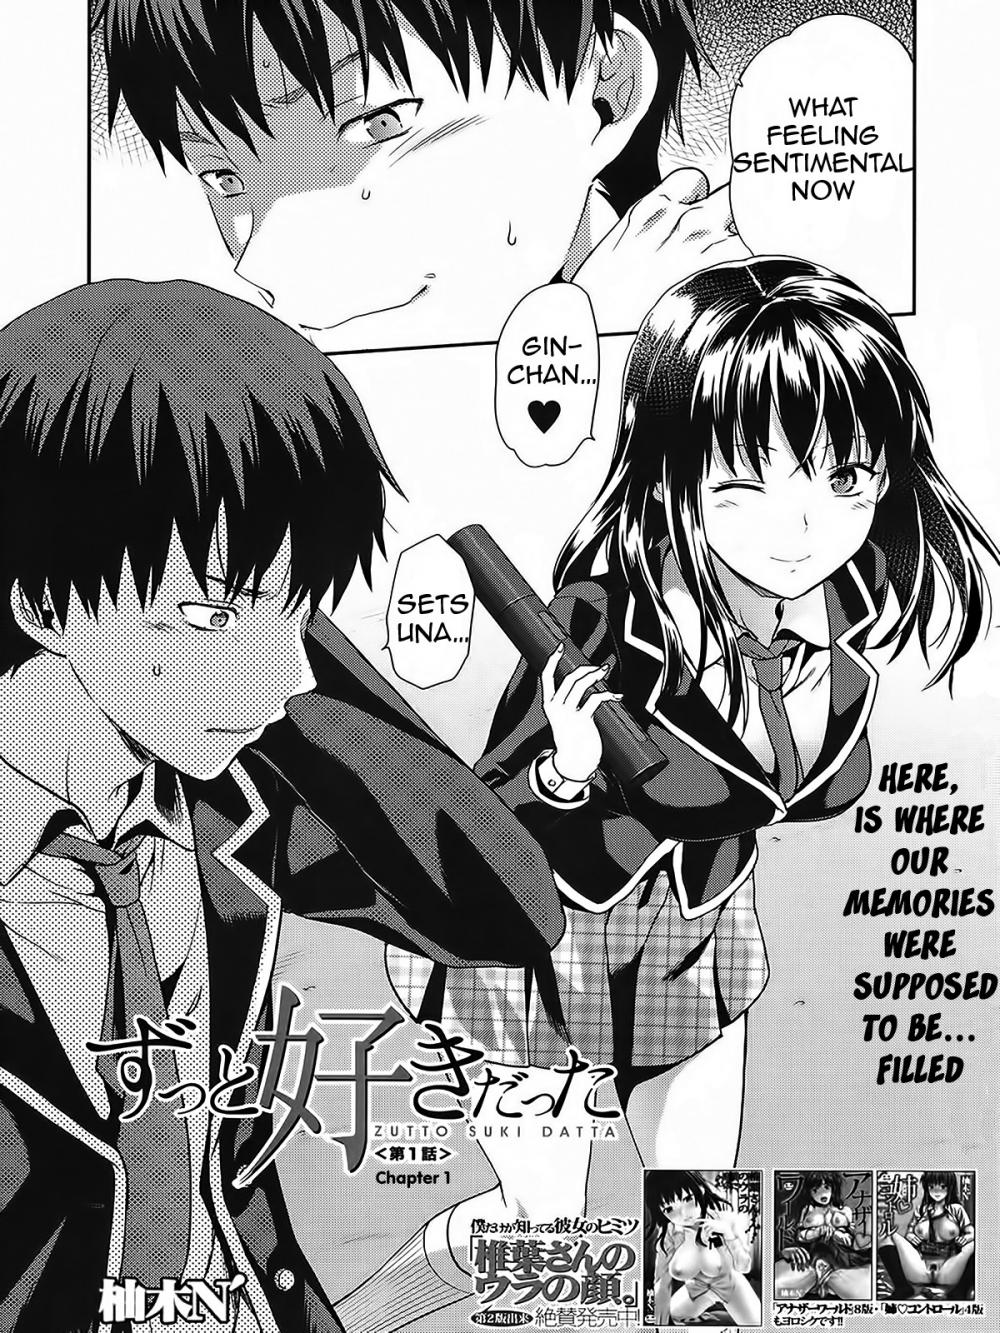 Hentai Manga Comic-Zutto Suki Datta-Chapter 1-2